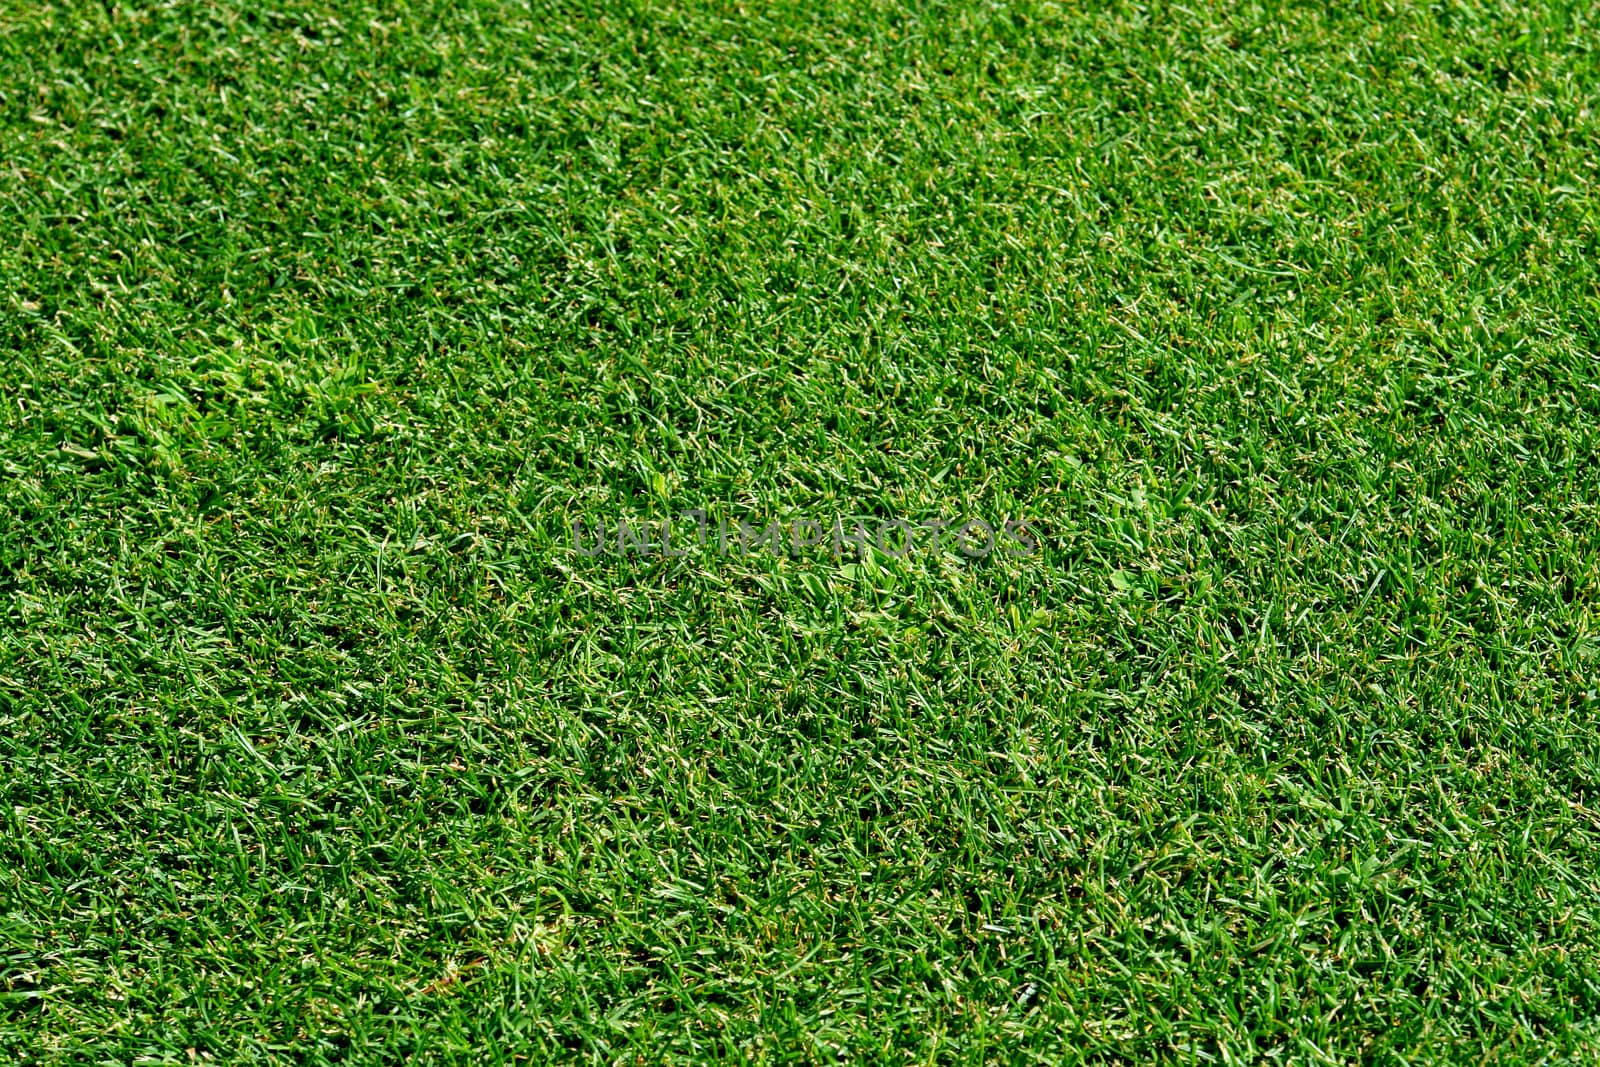 Golf course lawn pattern detail